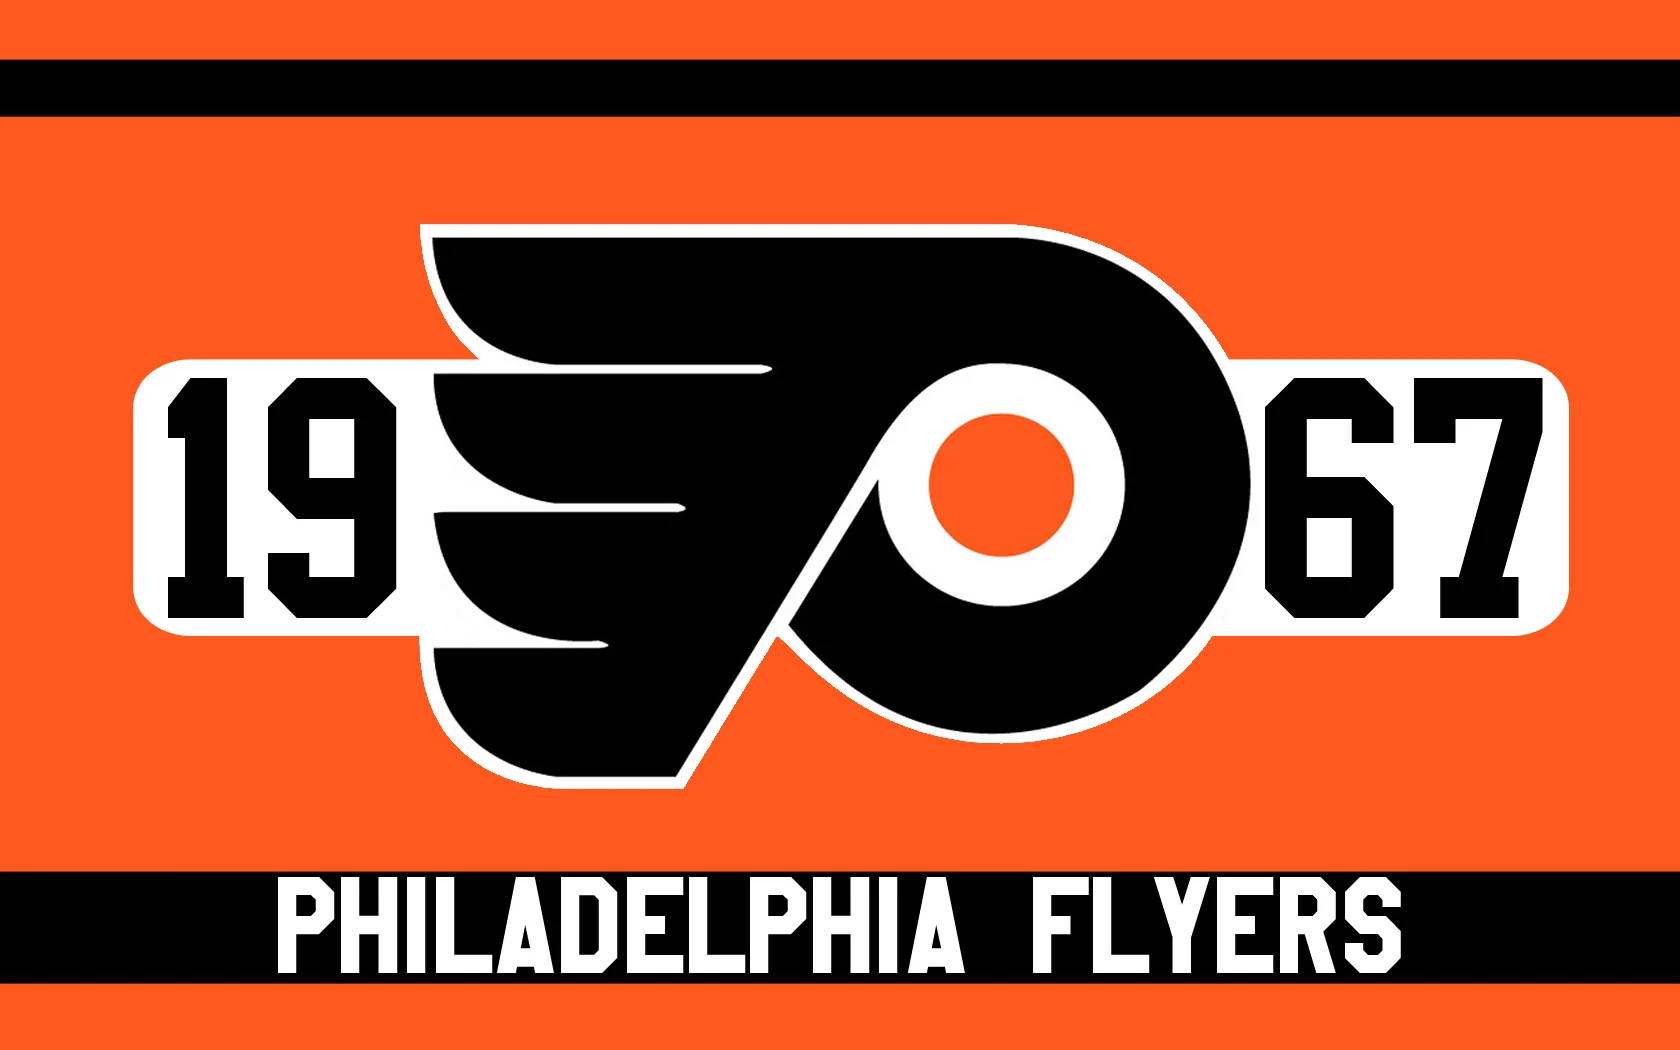 Philadelphia Flyers 1967 Logo - Classic Heritage Wallpaper